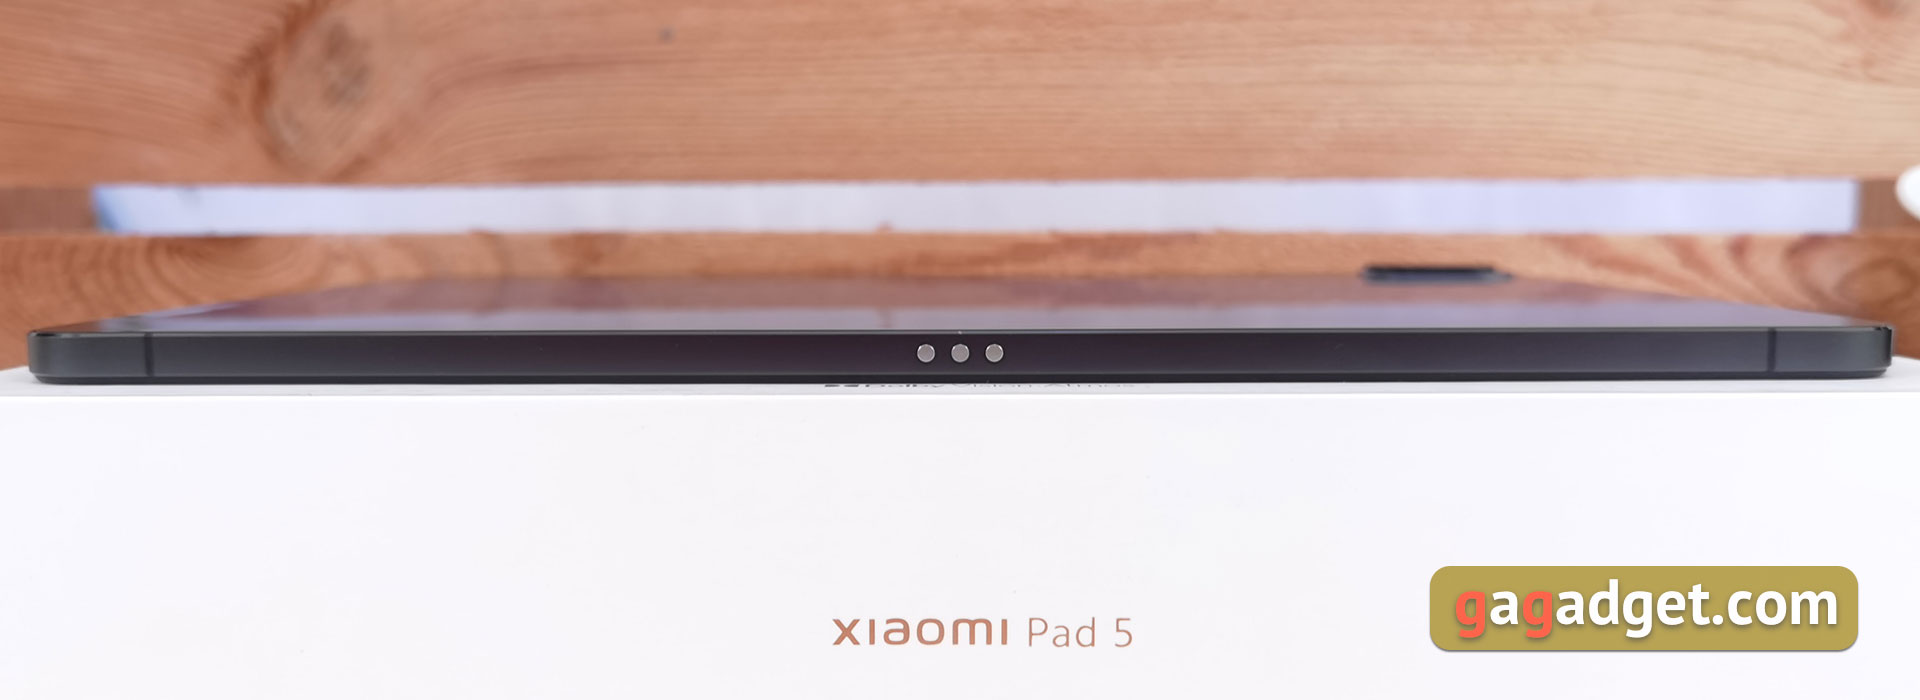 Xiaomi Pad 5 Review-11